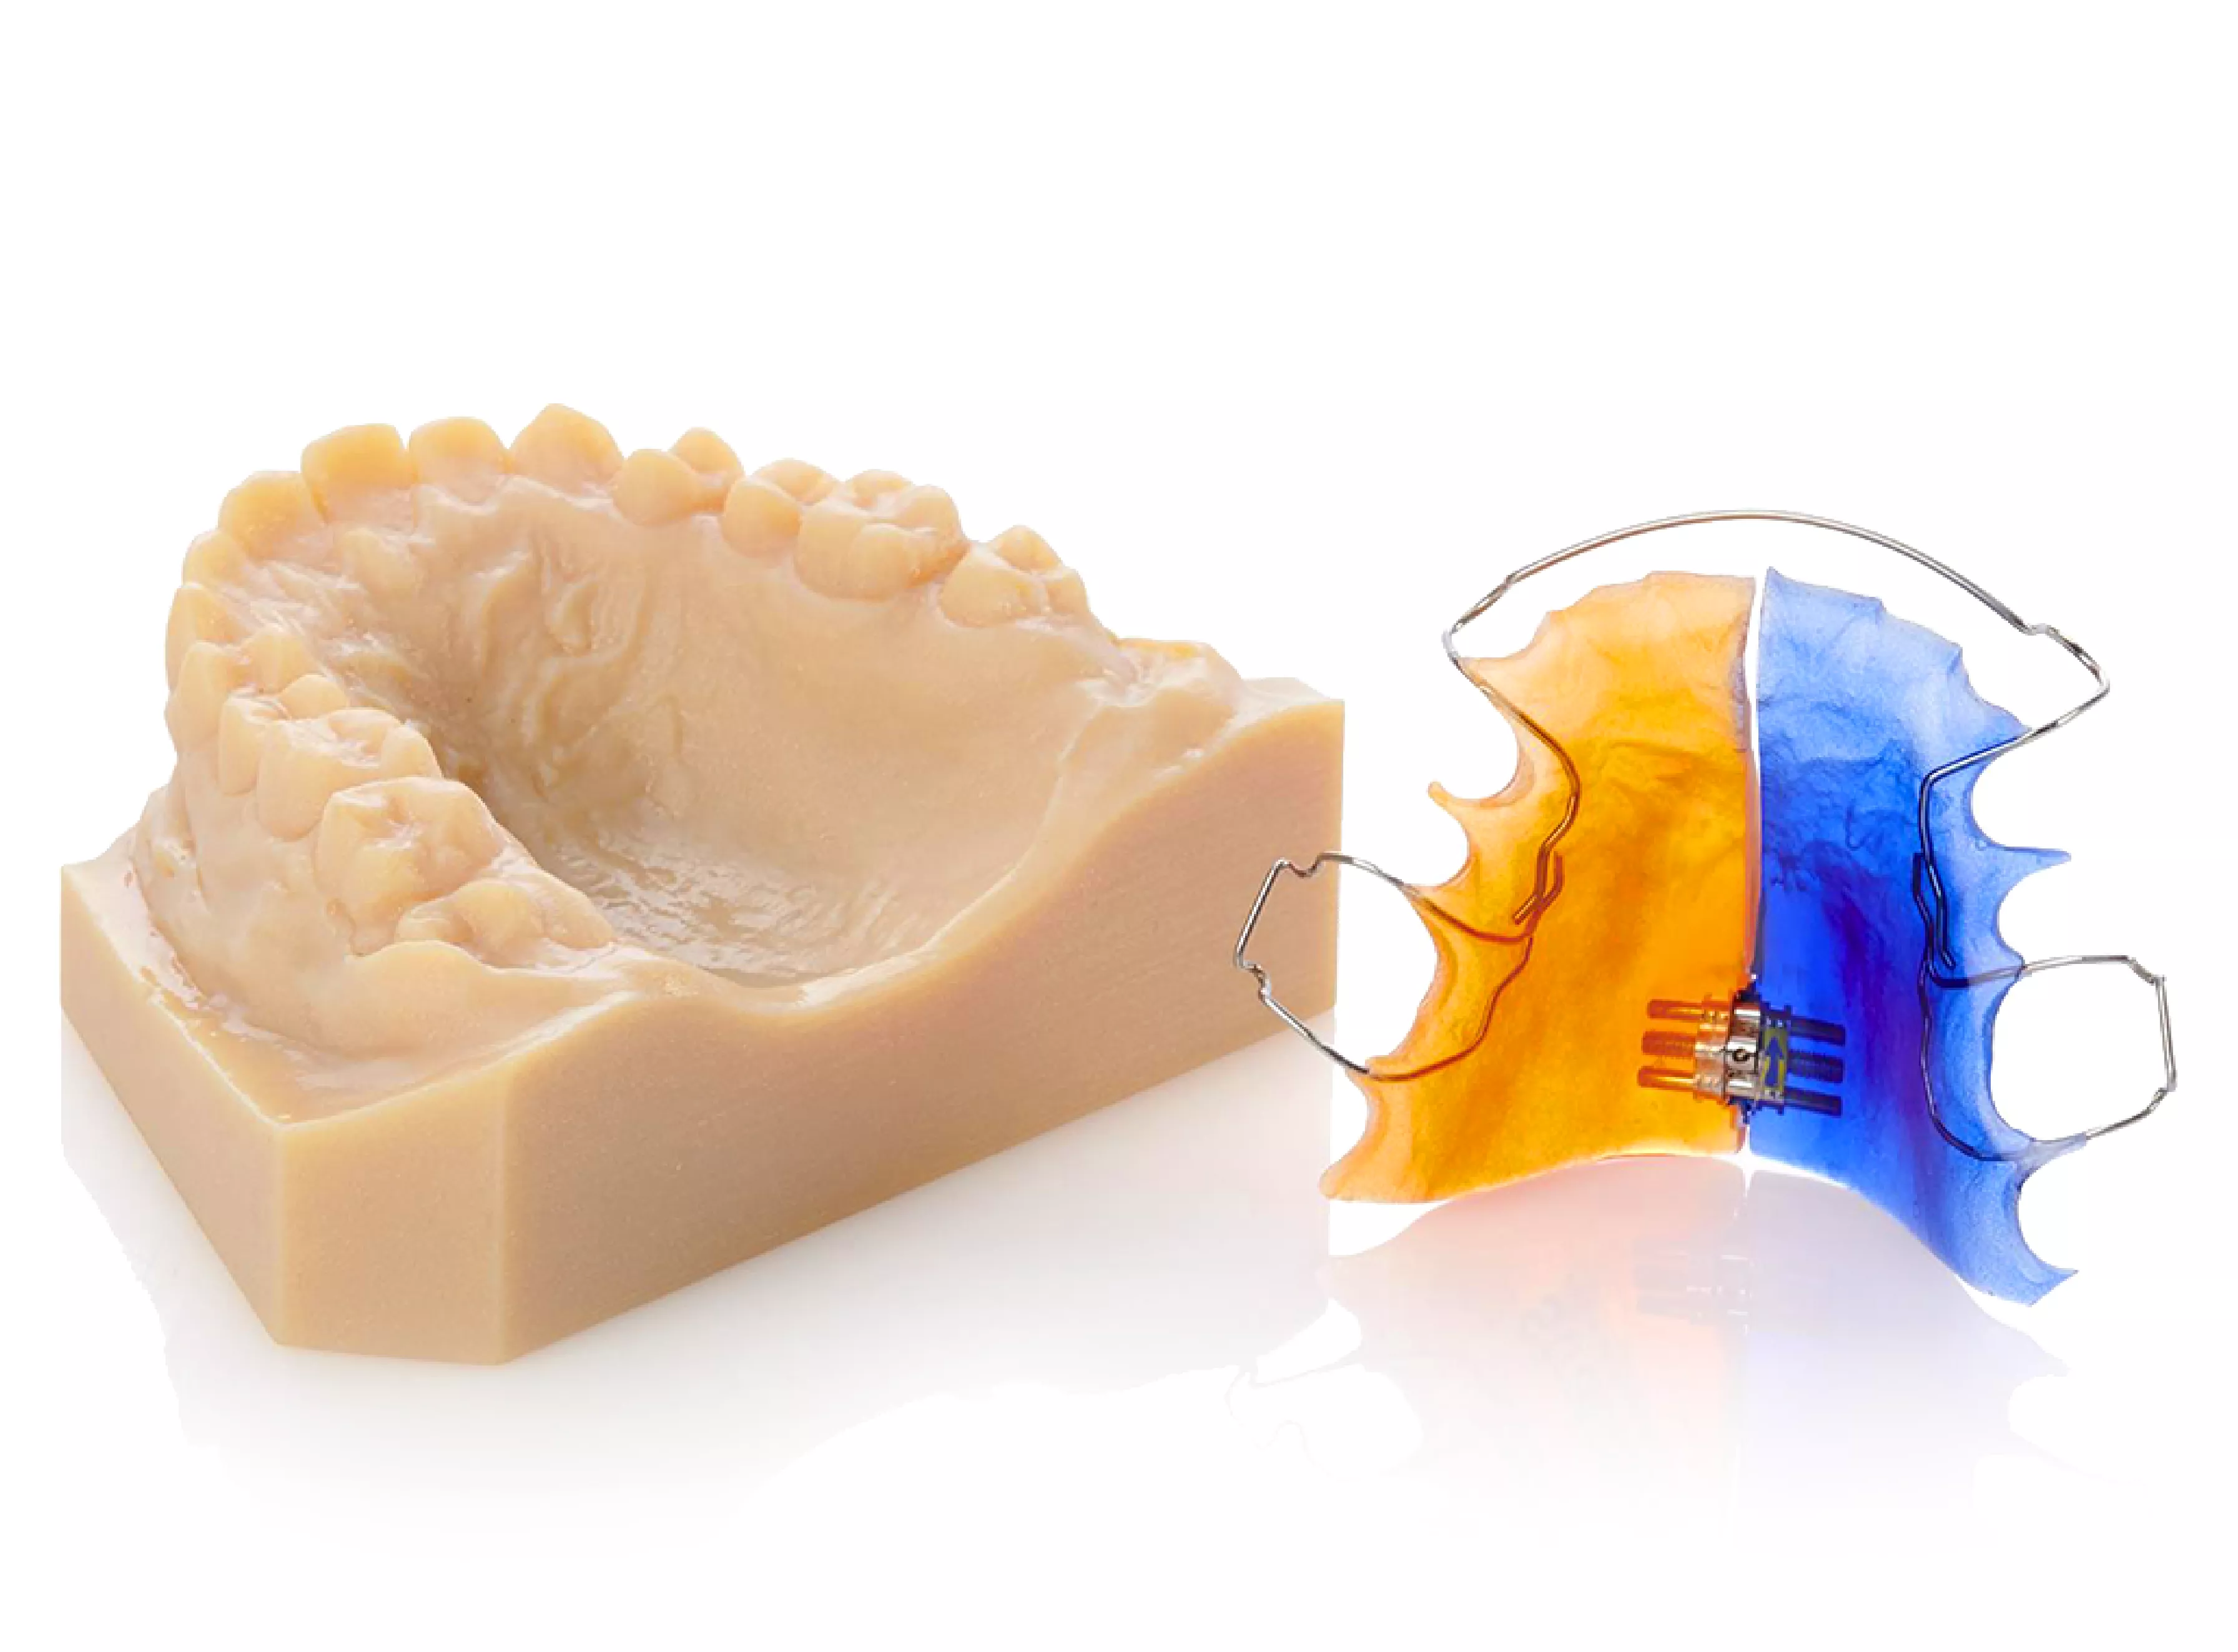 Dental Orthodontics prototypes 3D printed on Stratasys Polyjet 3D printers with multi materials